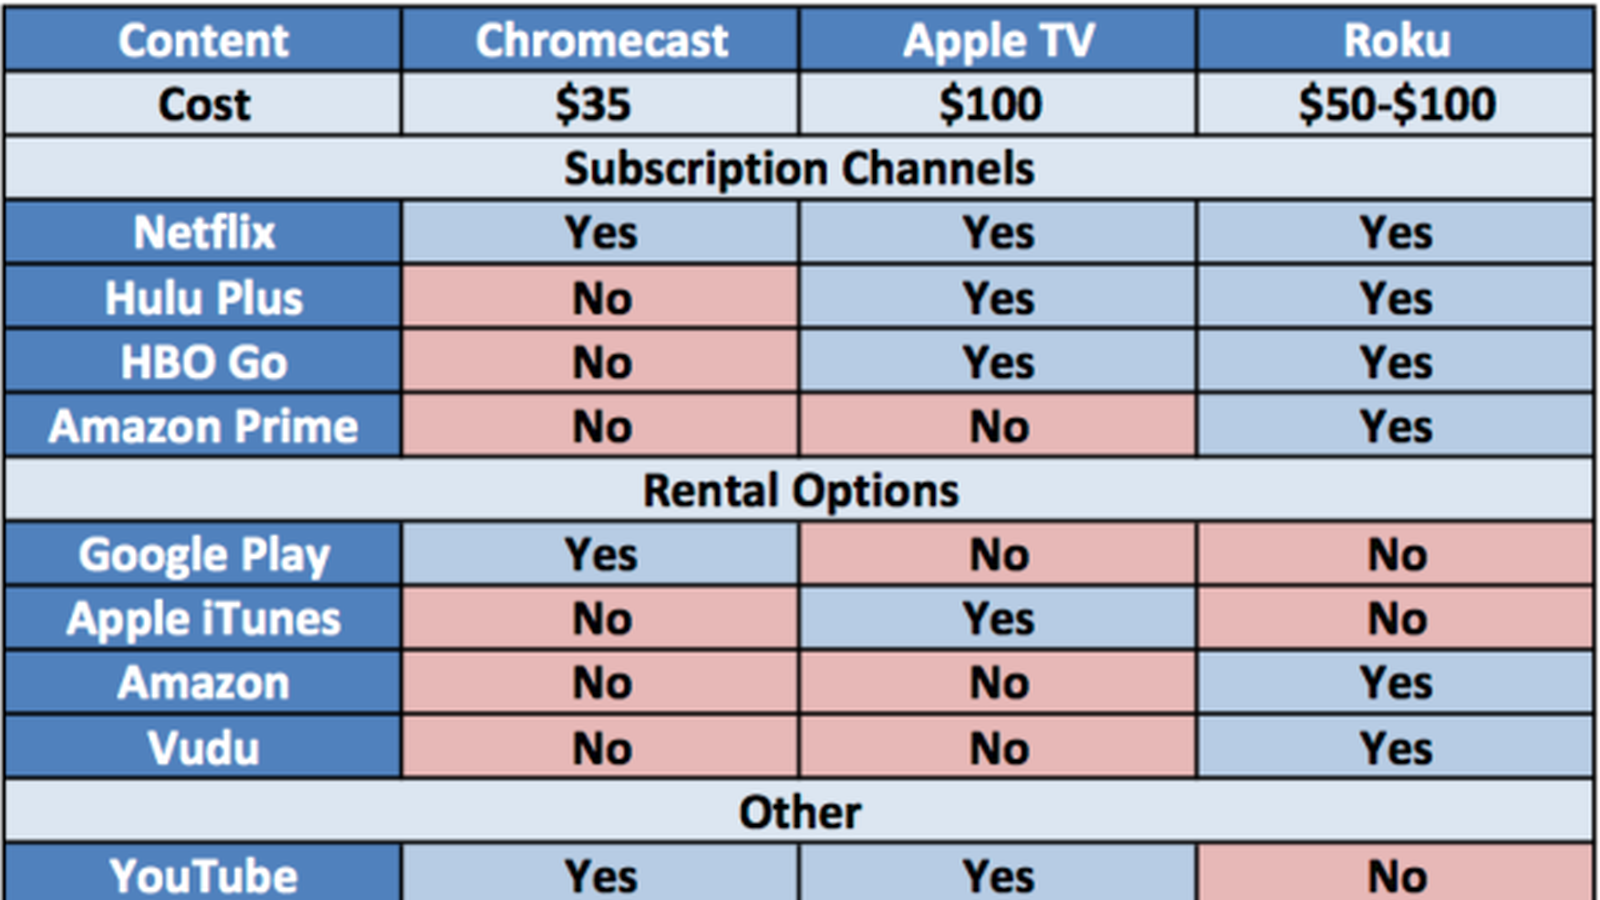 Comparison Chart of Chromecast, TV and Roku Content Options - MacRumors